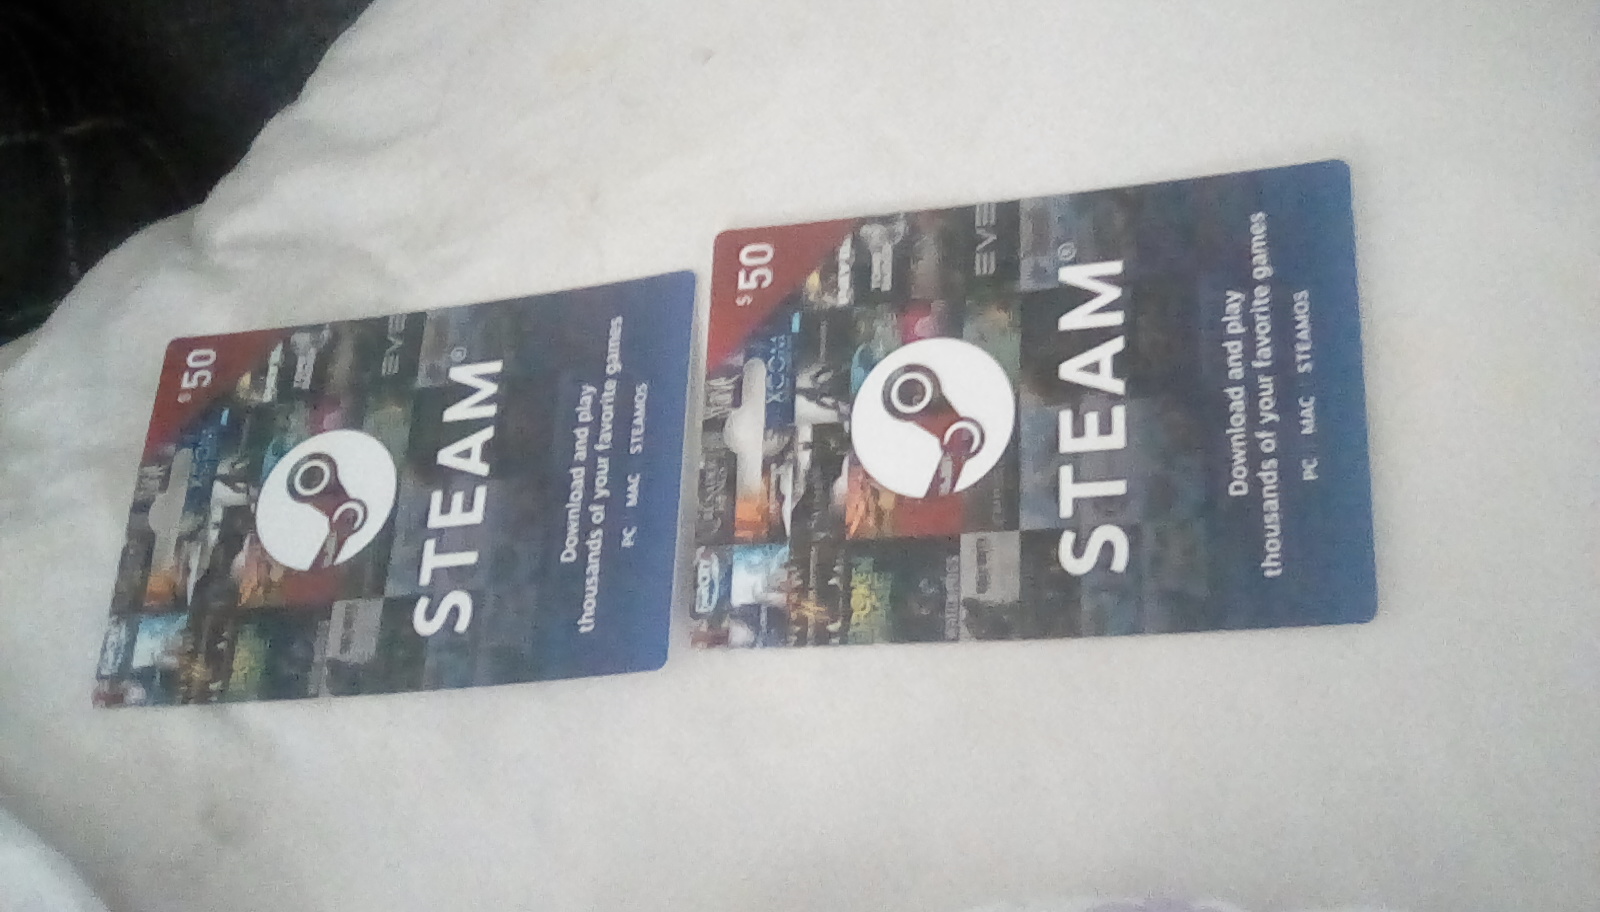 Steam cards